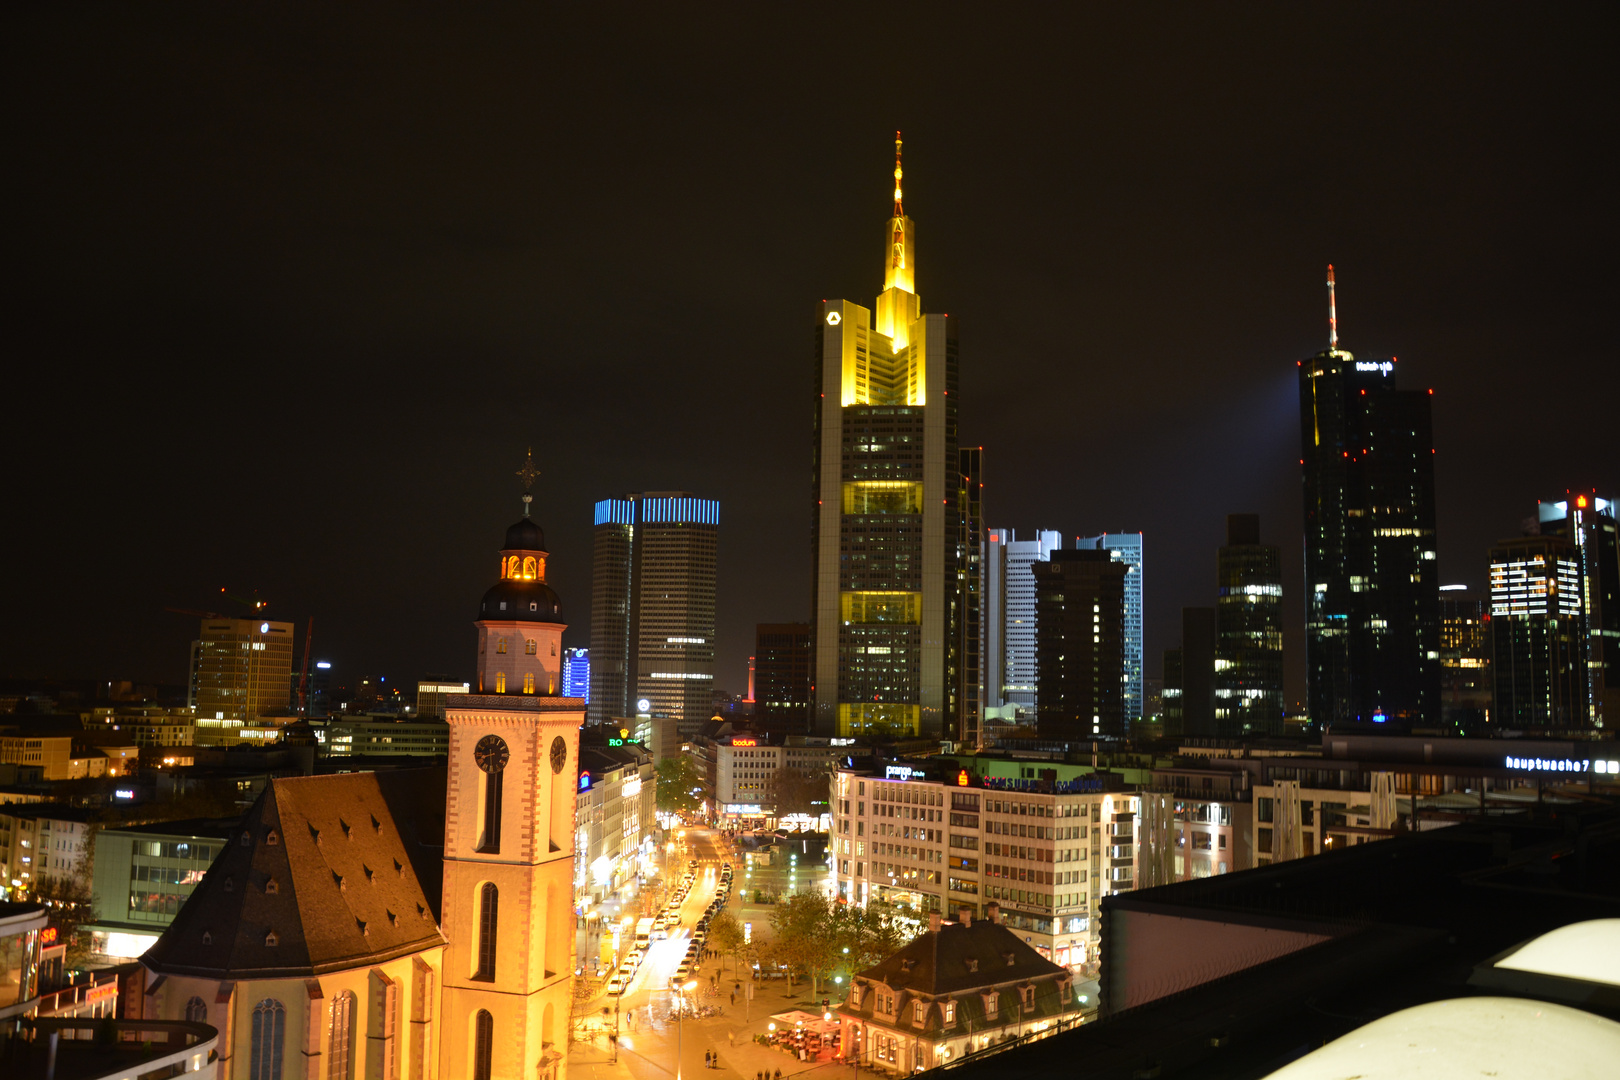 Frankfurt Hauptwache